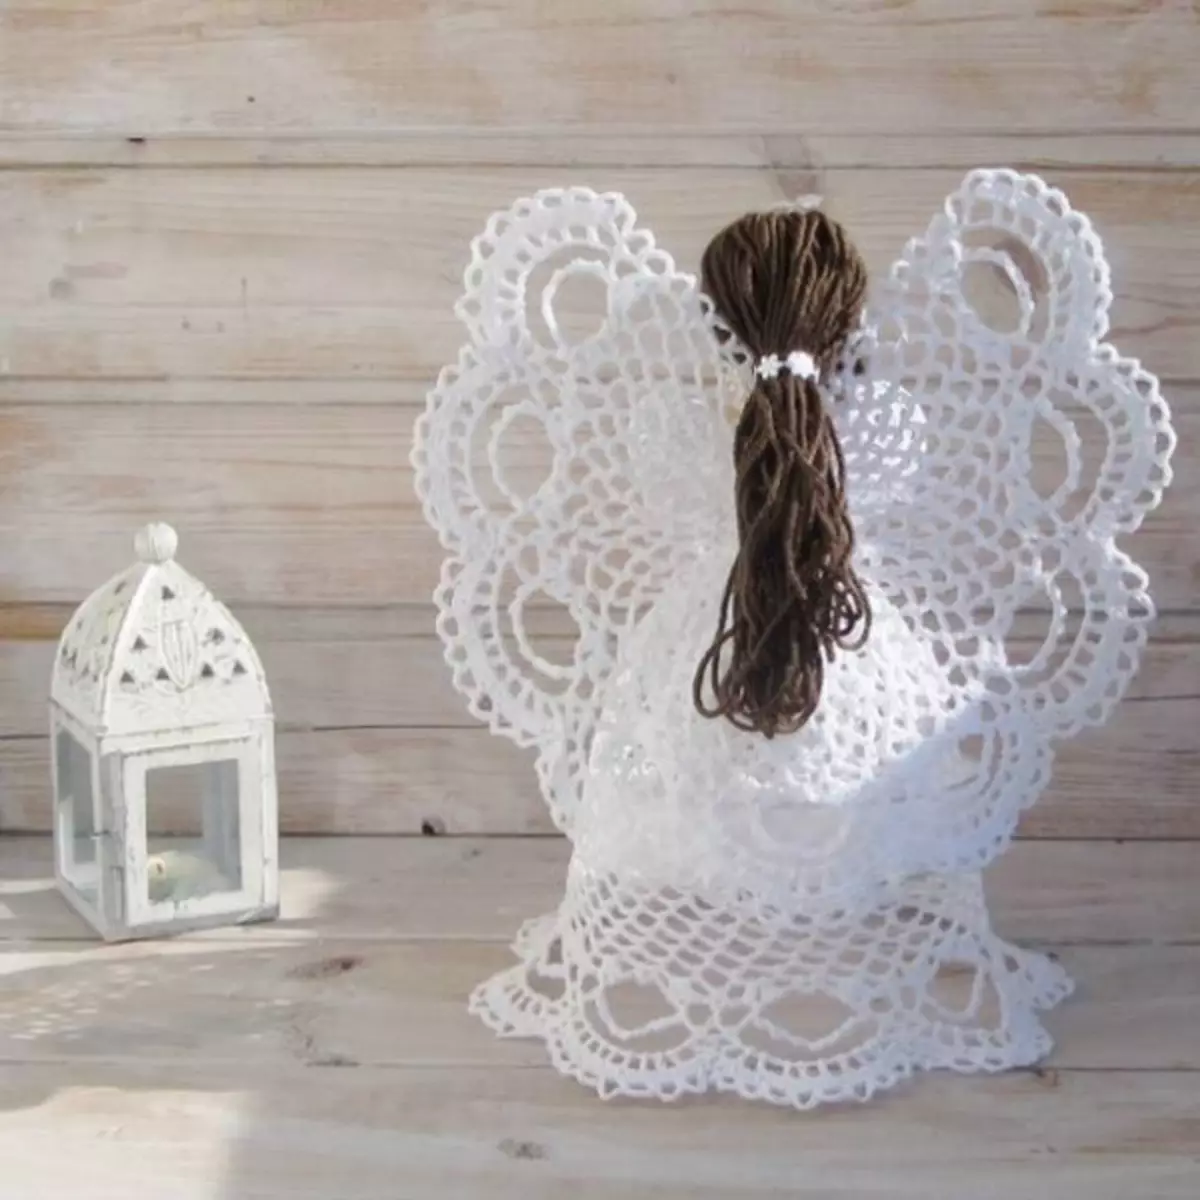 Openwork Angels Crochet. Mga laraw